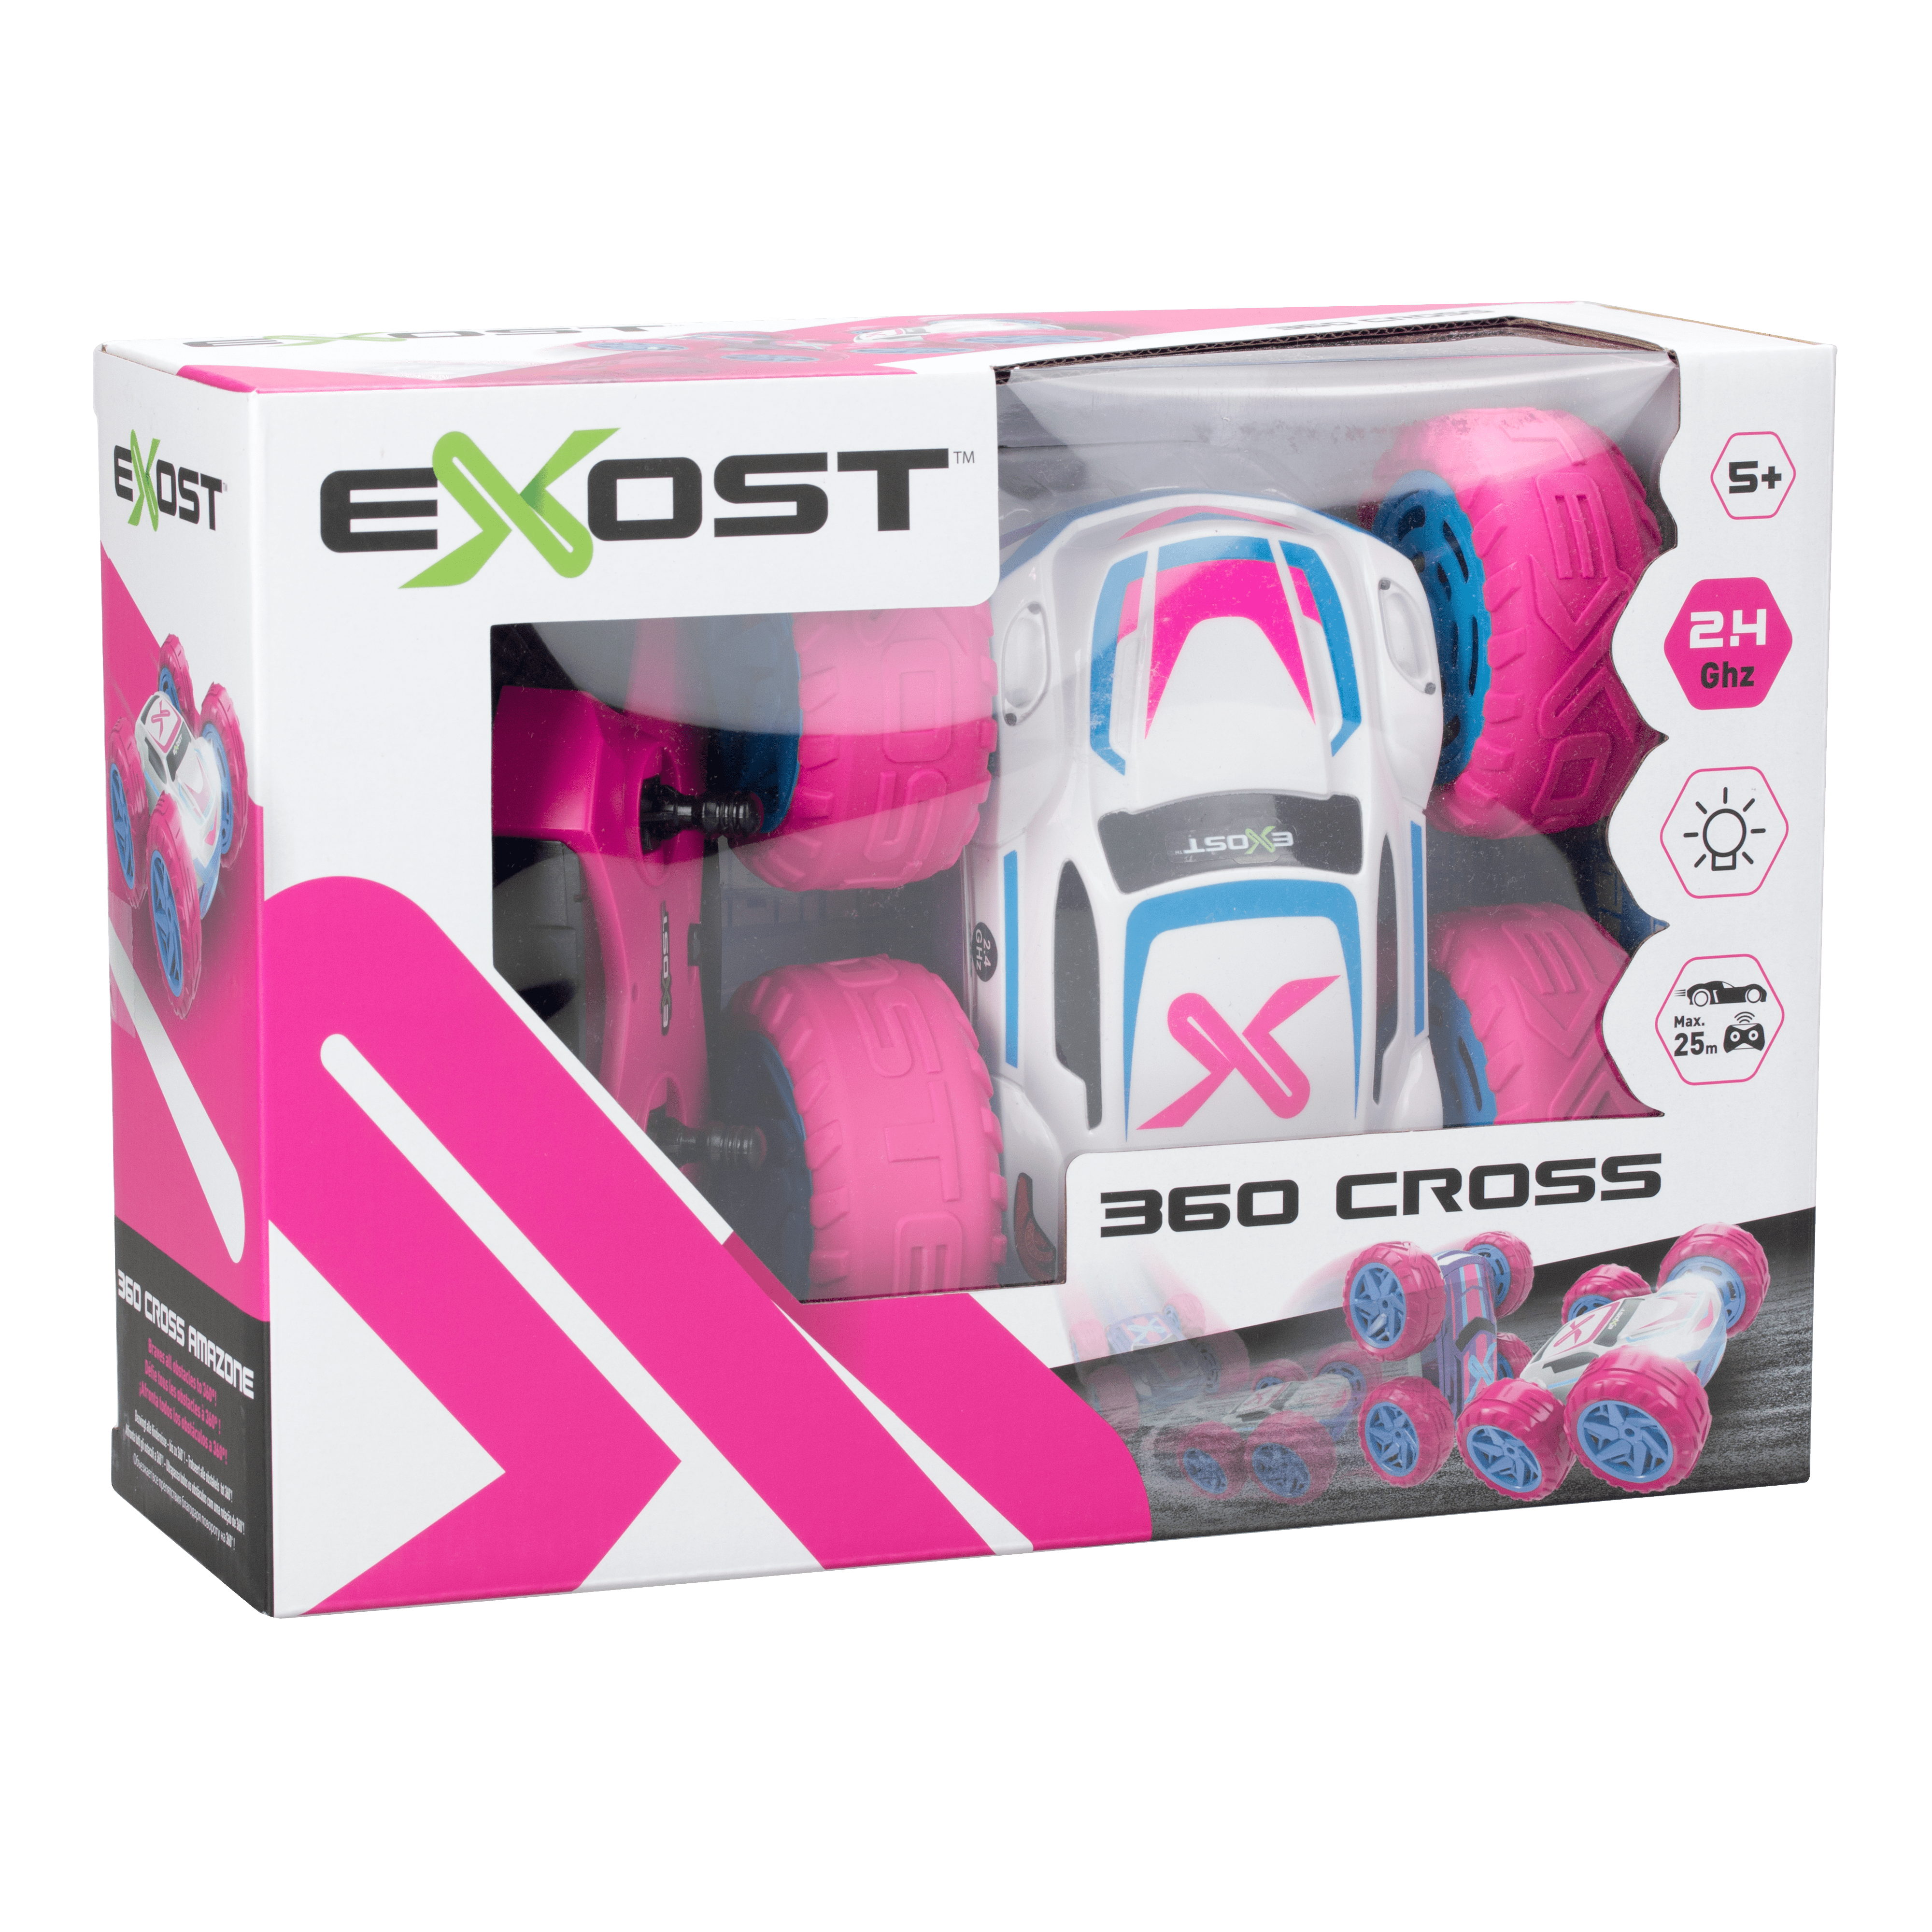 EXOST 360 CROSS II - VOITURE TELECOMMANDEE PAR SILVERTLIT - DEMO